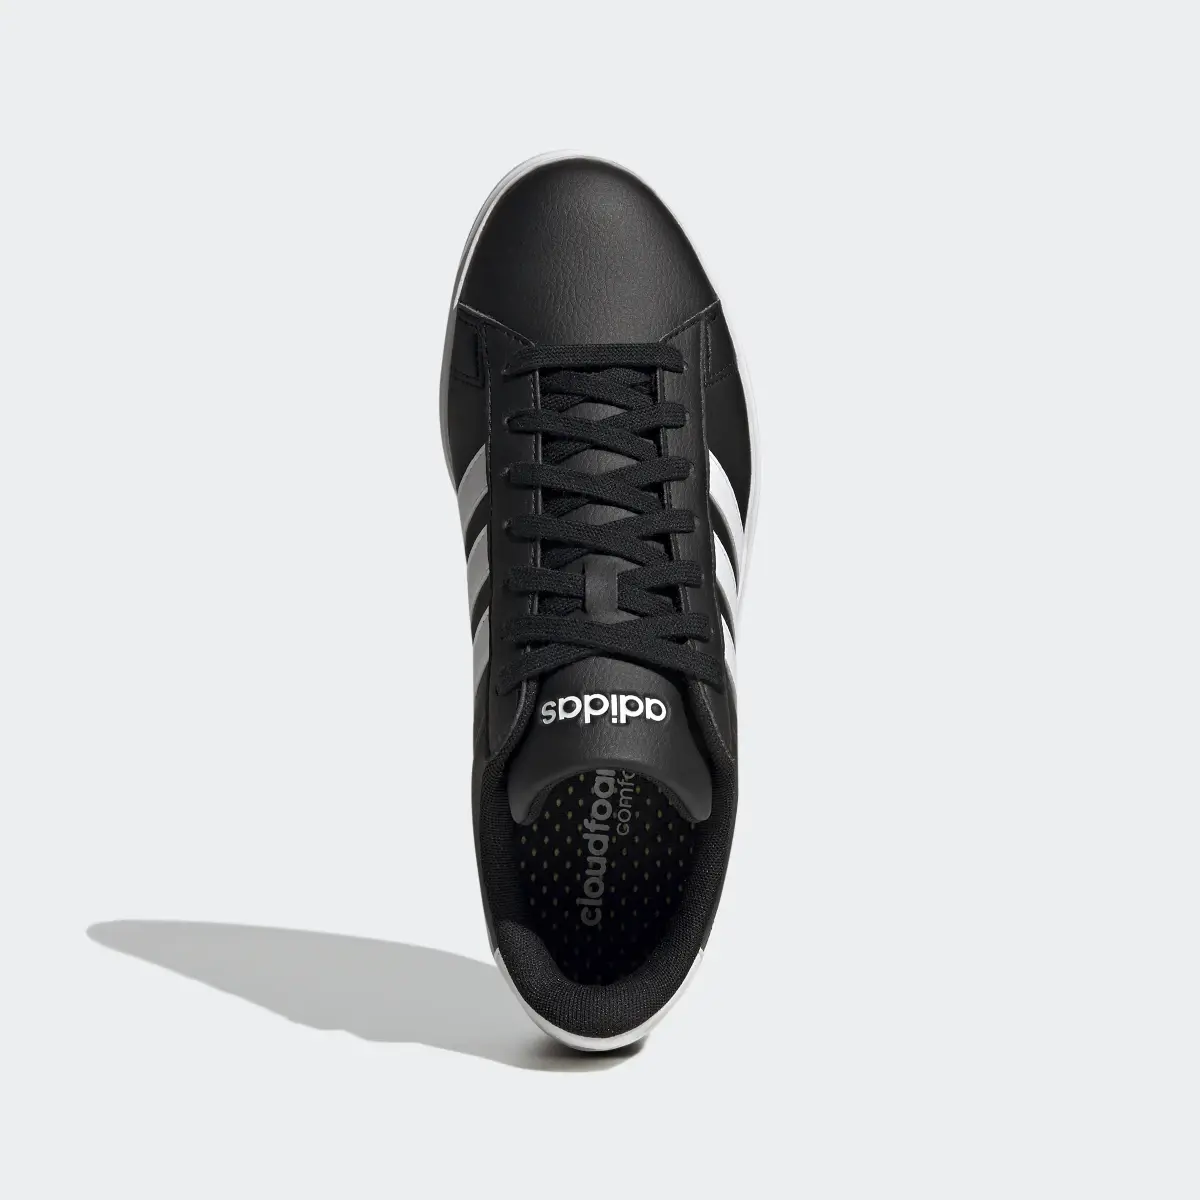 Adidas Grand Court Cloudfoam Comfort Shoes. 3